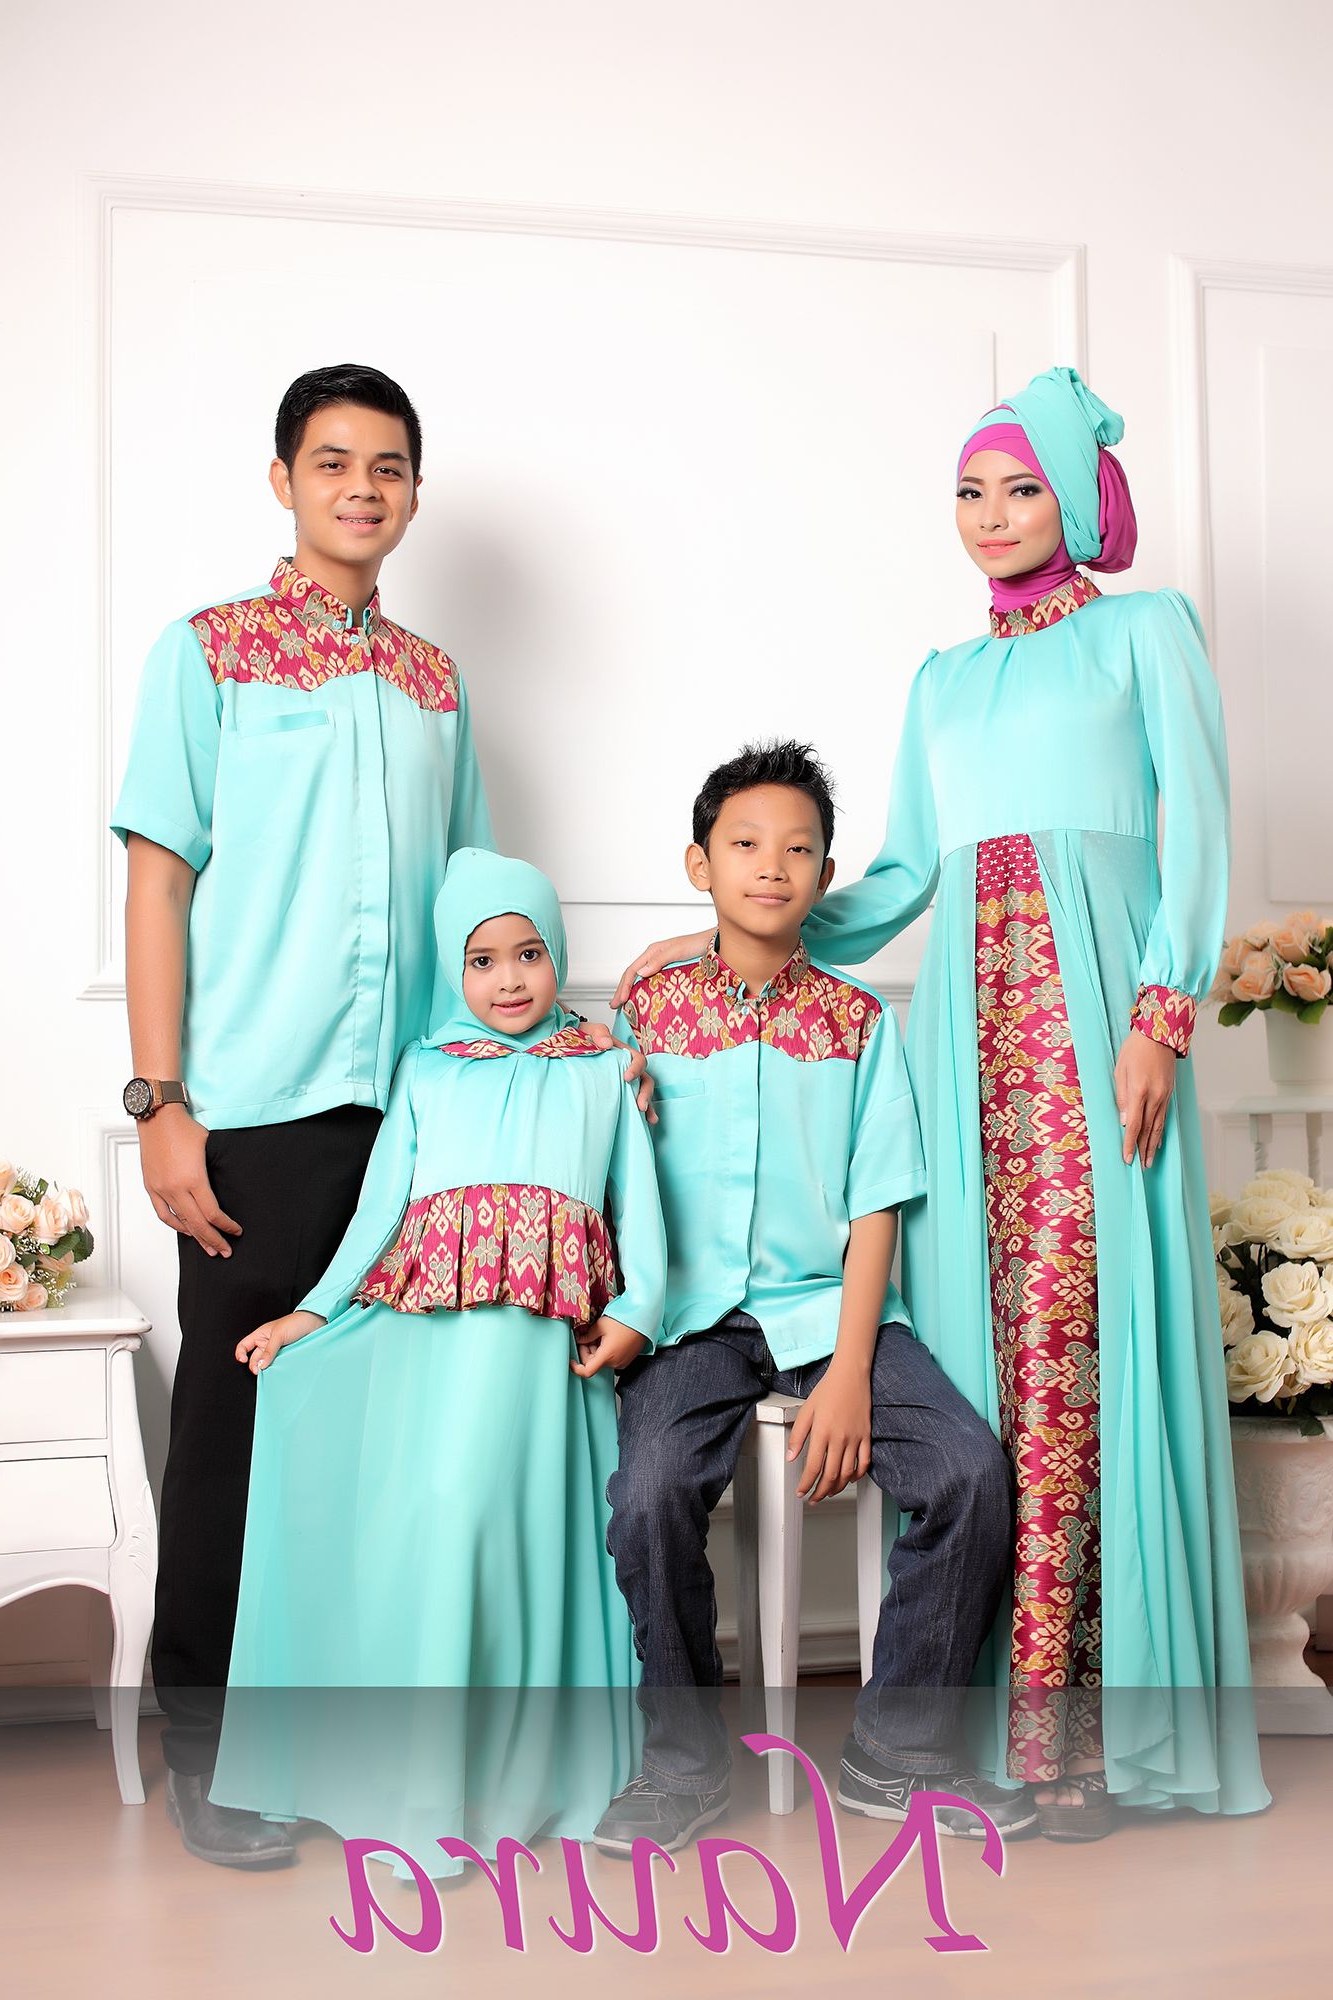 Model Inspirasi Baju Lebaran Keluarga 2019 S1du Pin Oleh Dini Tasriva Di Gamis Batik Di 2019